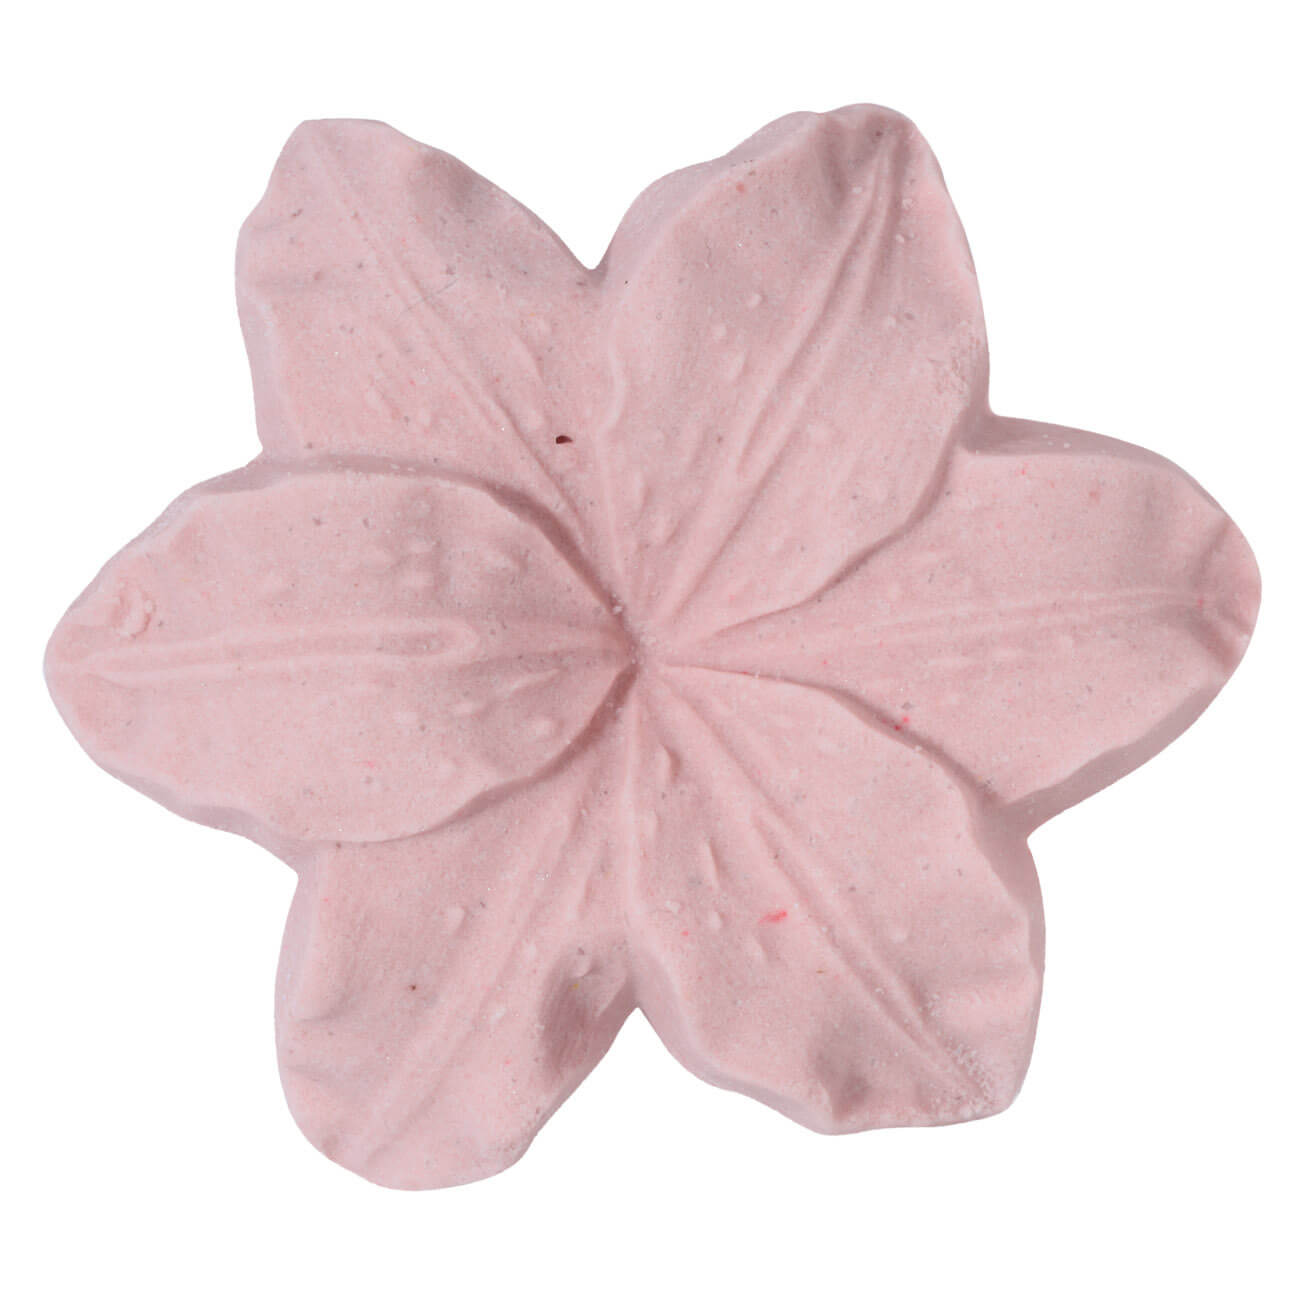 Бомбочка для ванны, 100 гр, розовая, Лилия, Лилия, Flower spa - фото 1